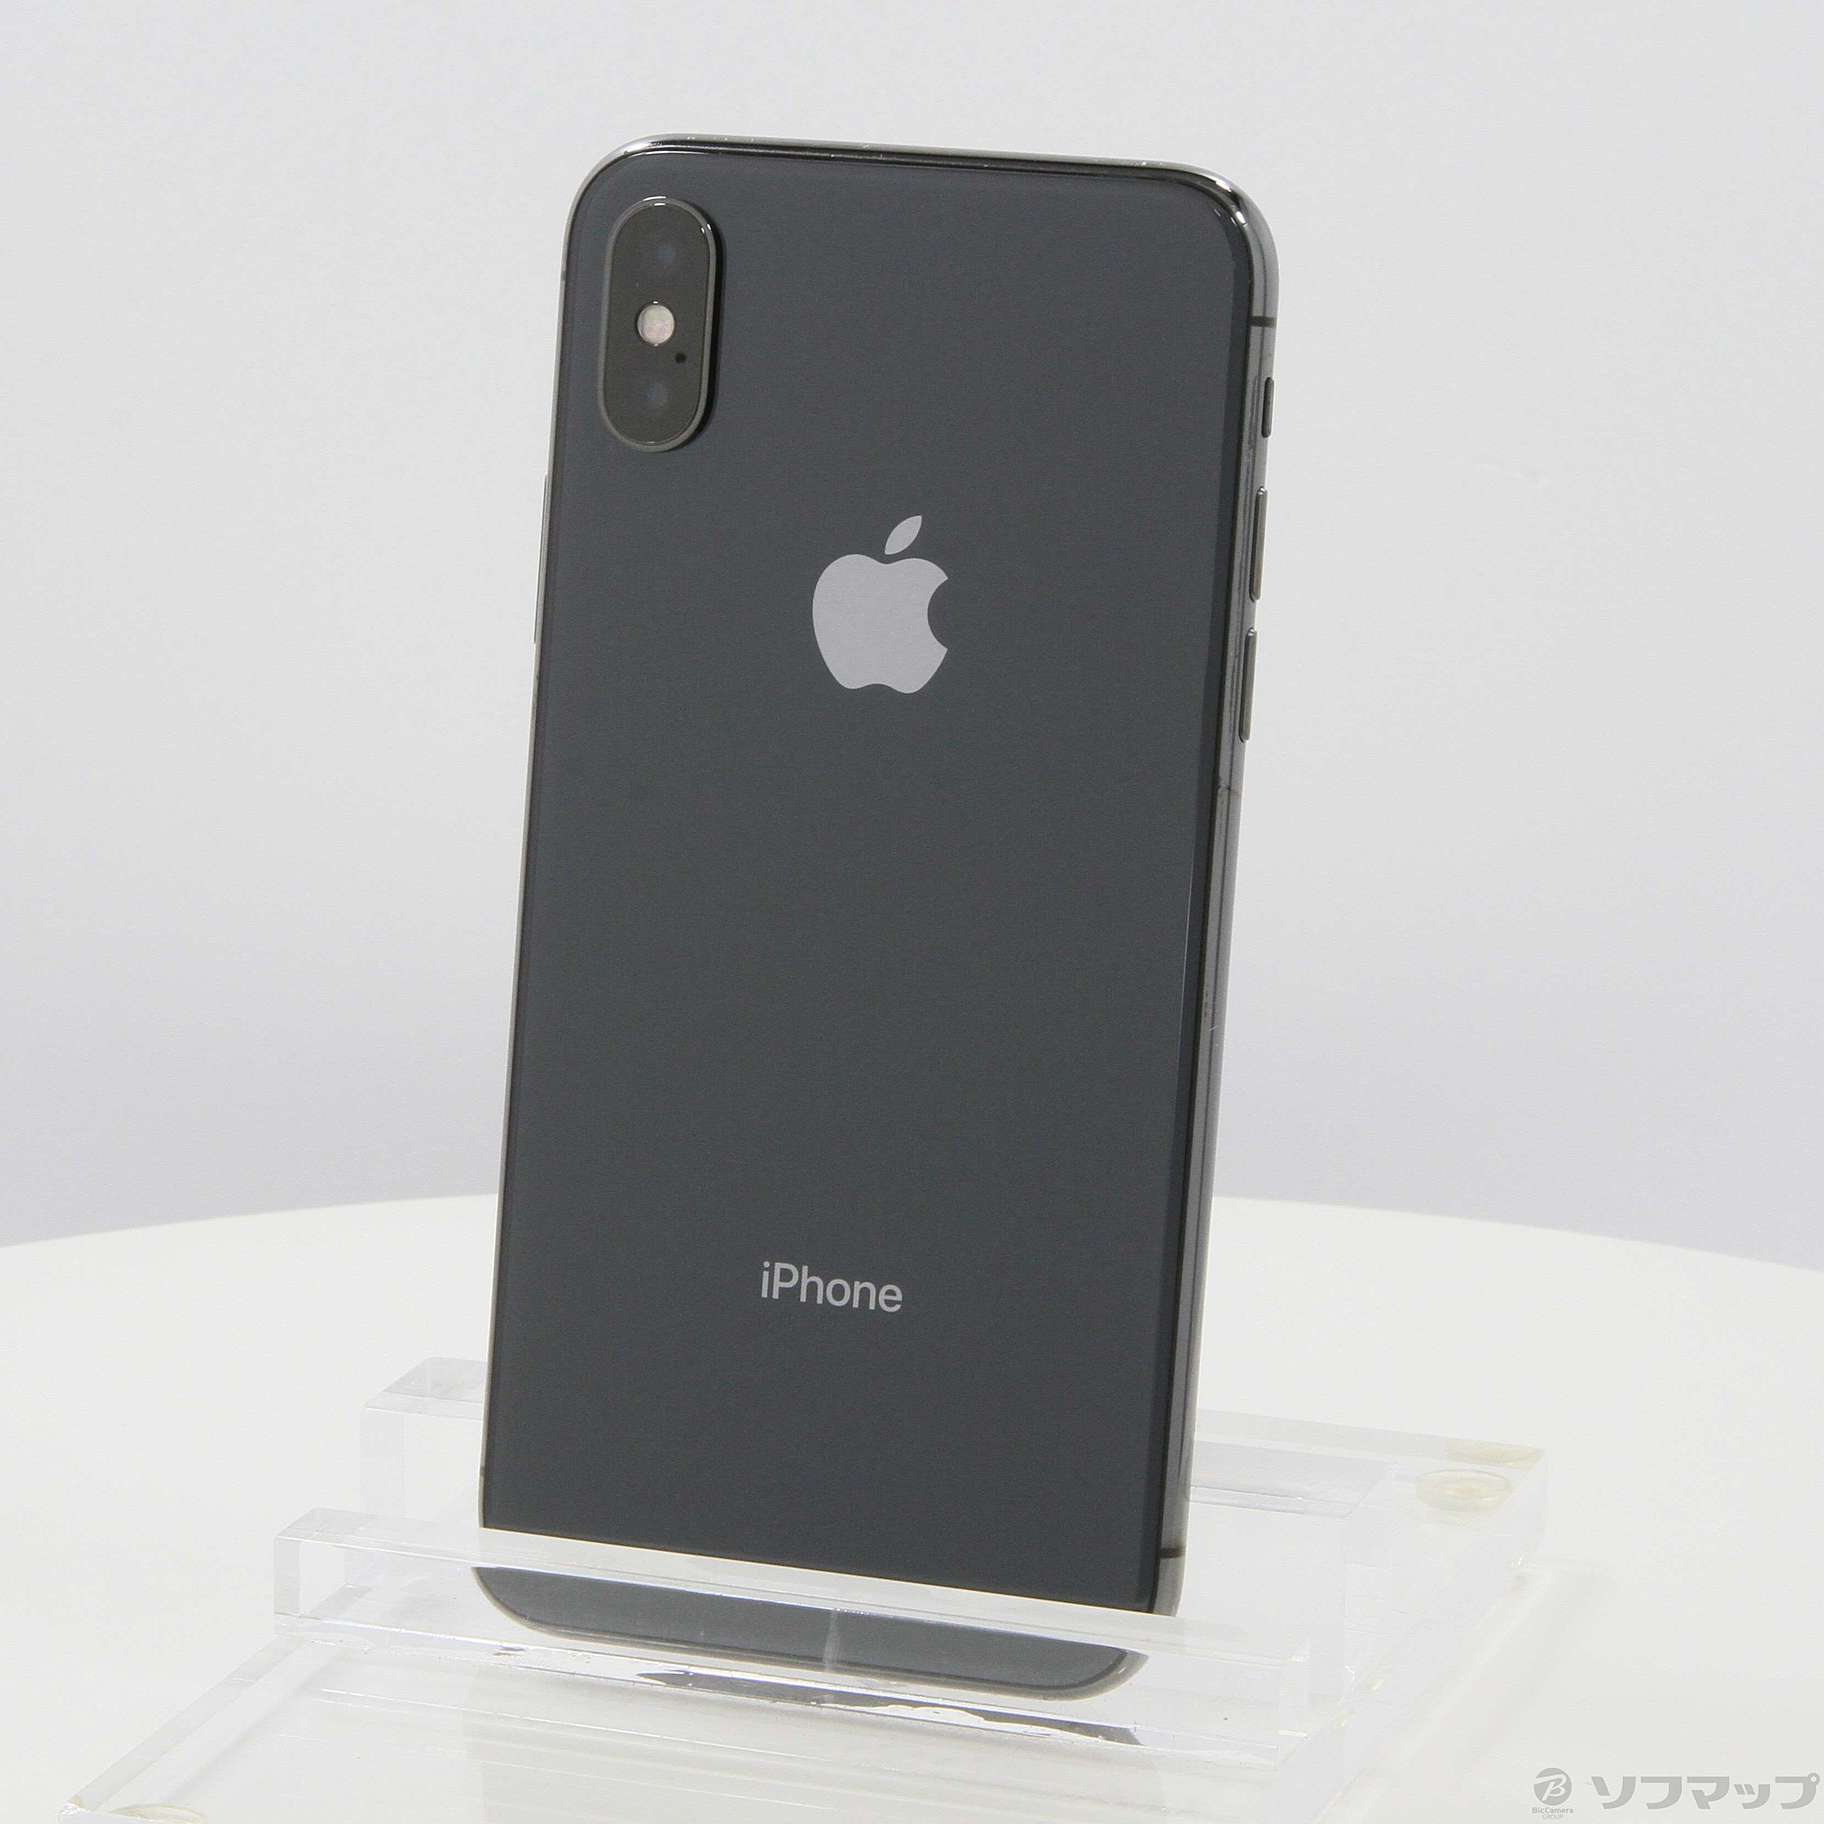 iPhone X SIMフリー BLACK